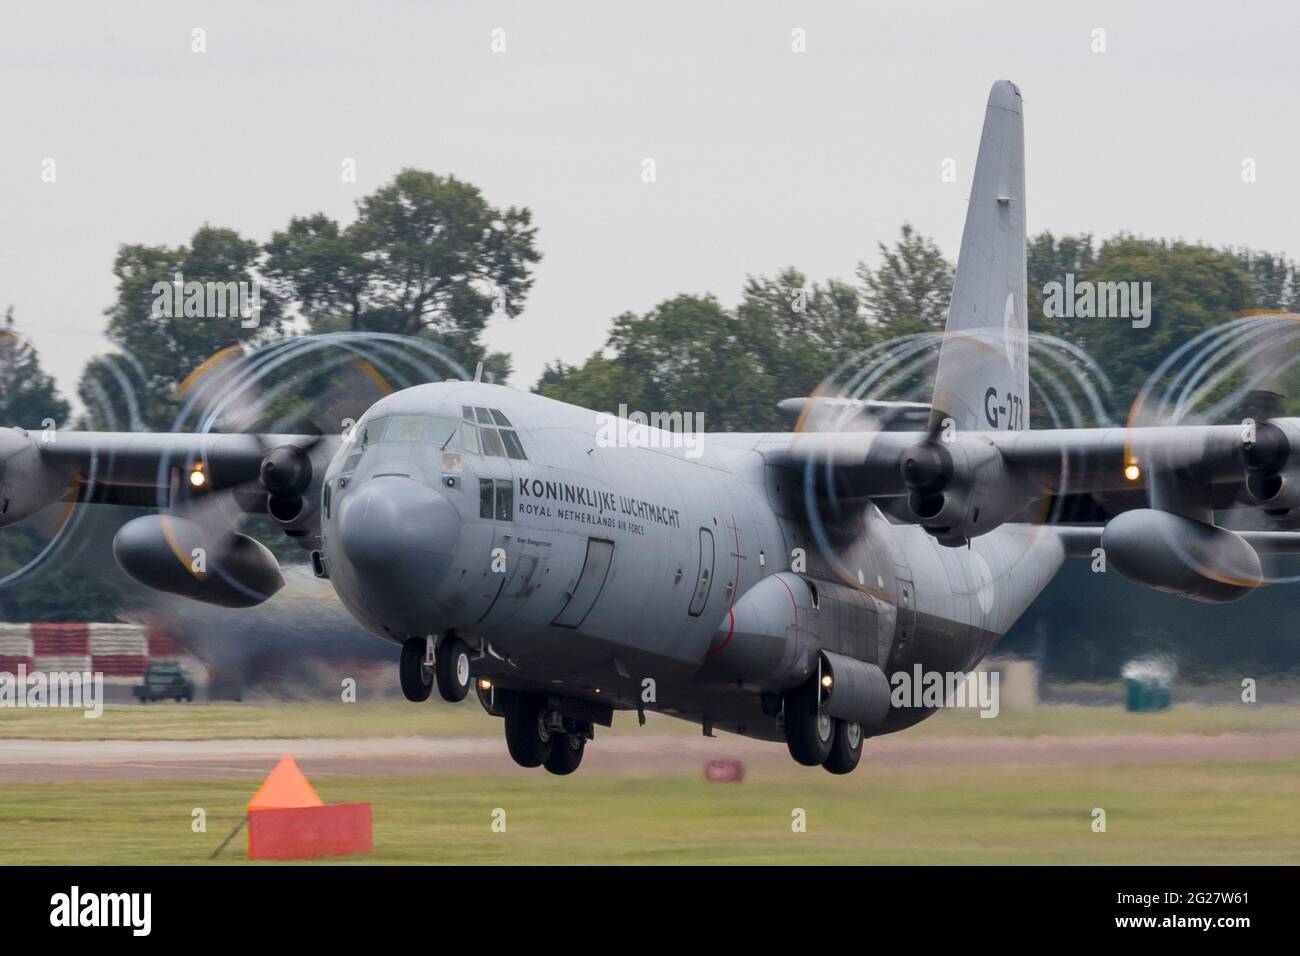 A Royal Dutch Air Force C-130 Hercules taking off. Stock Photo